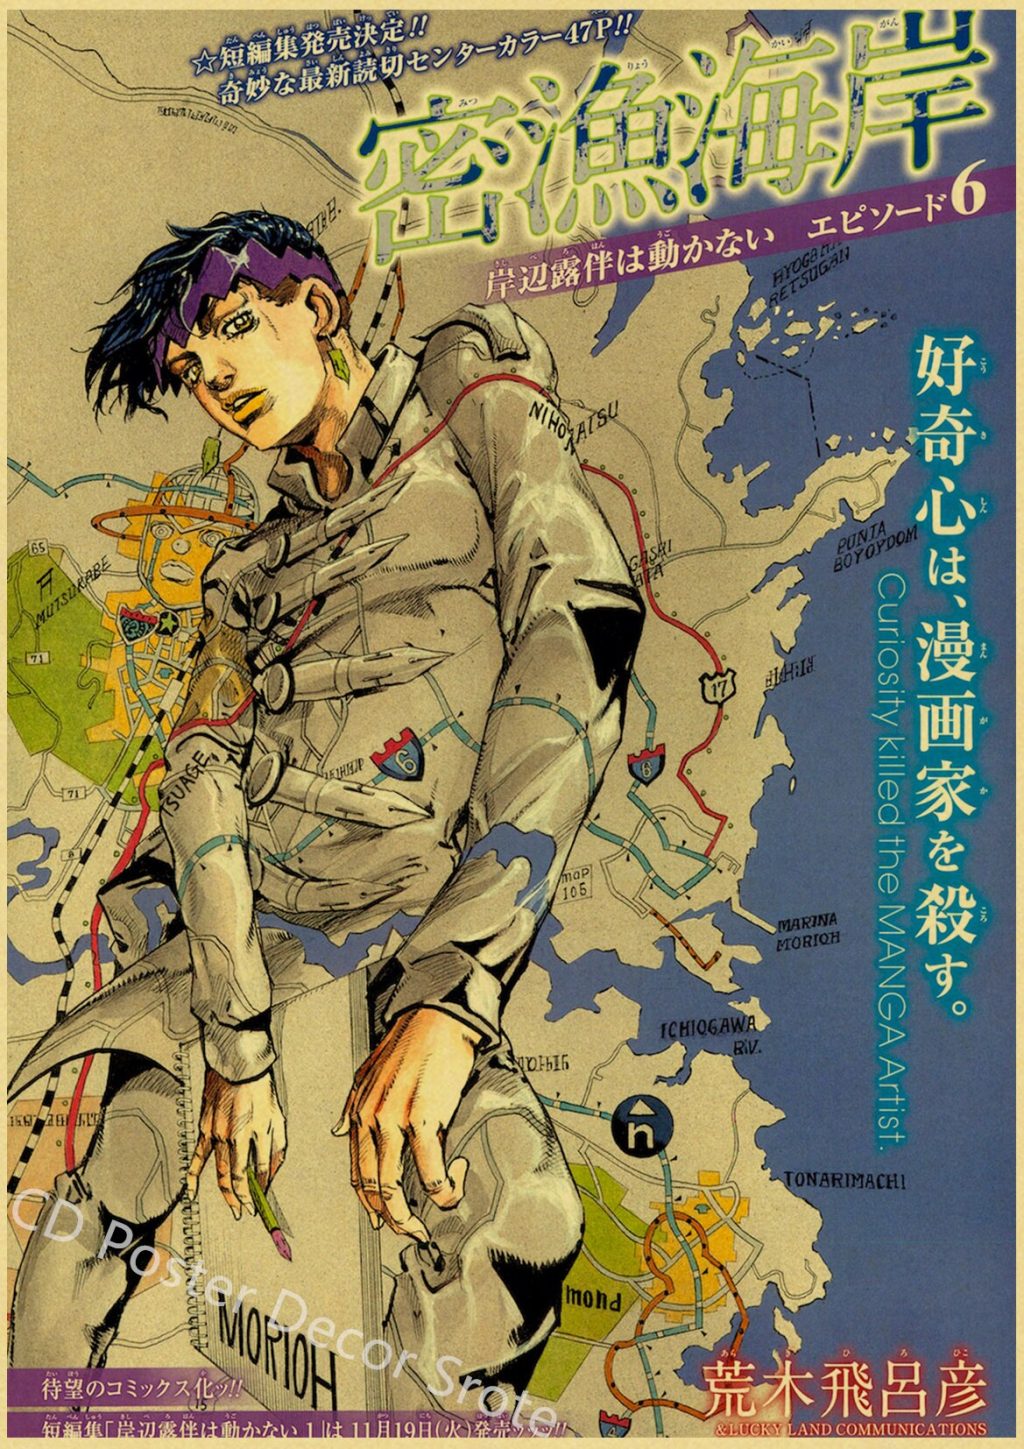 Anime JoJo Bizarre Adventure Retro Poster Kraft Paper Prints and Posters DIY Home Bar Cafe Movie 21 - Anime Posters Shop